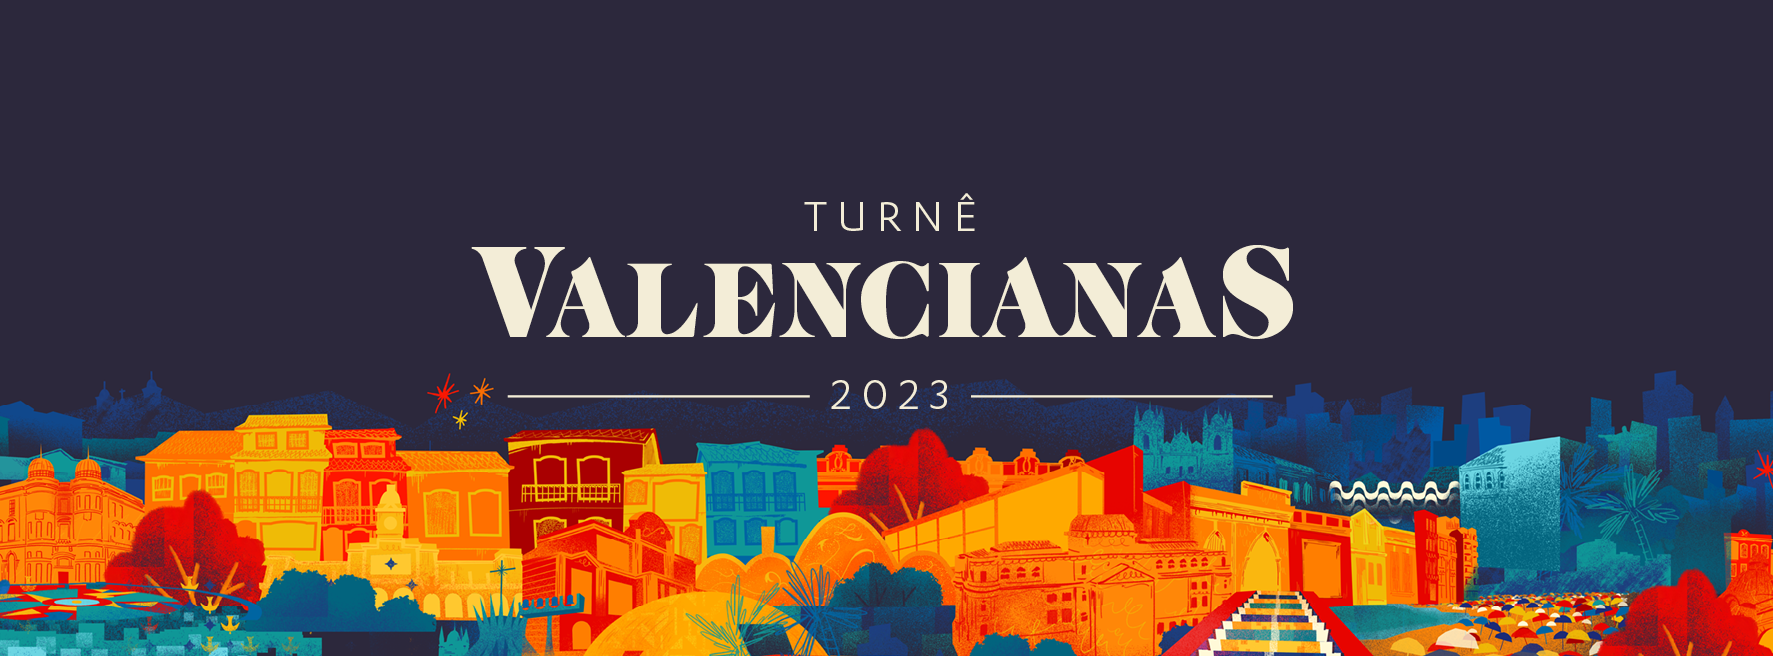 Turnê Valencianas 2023